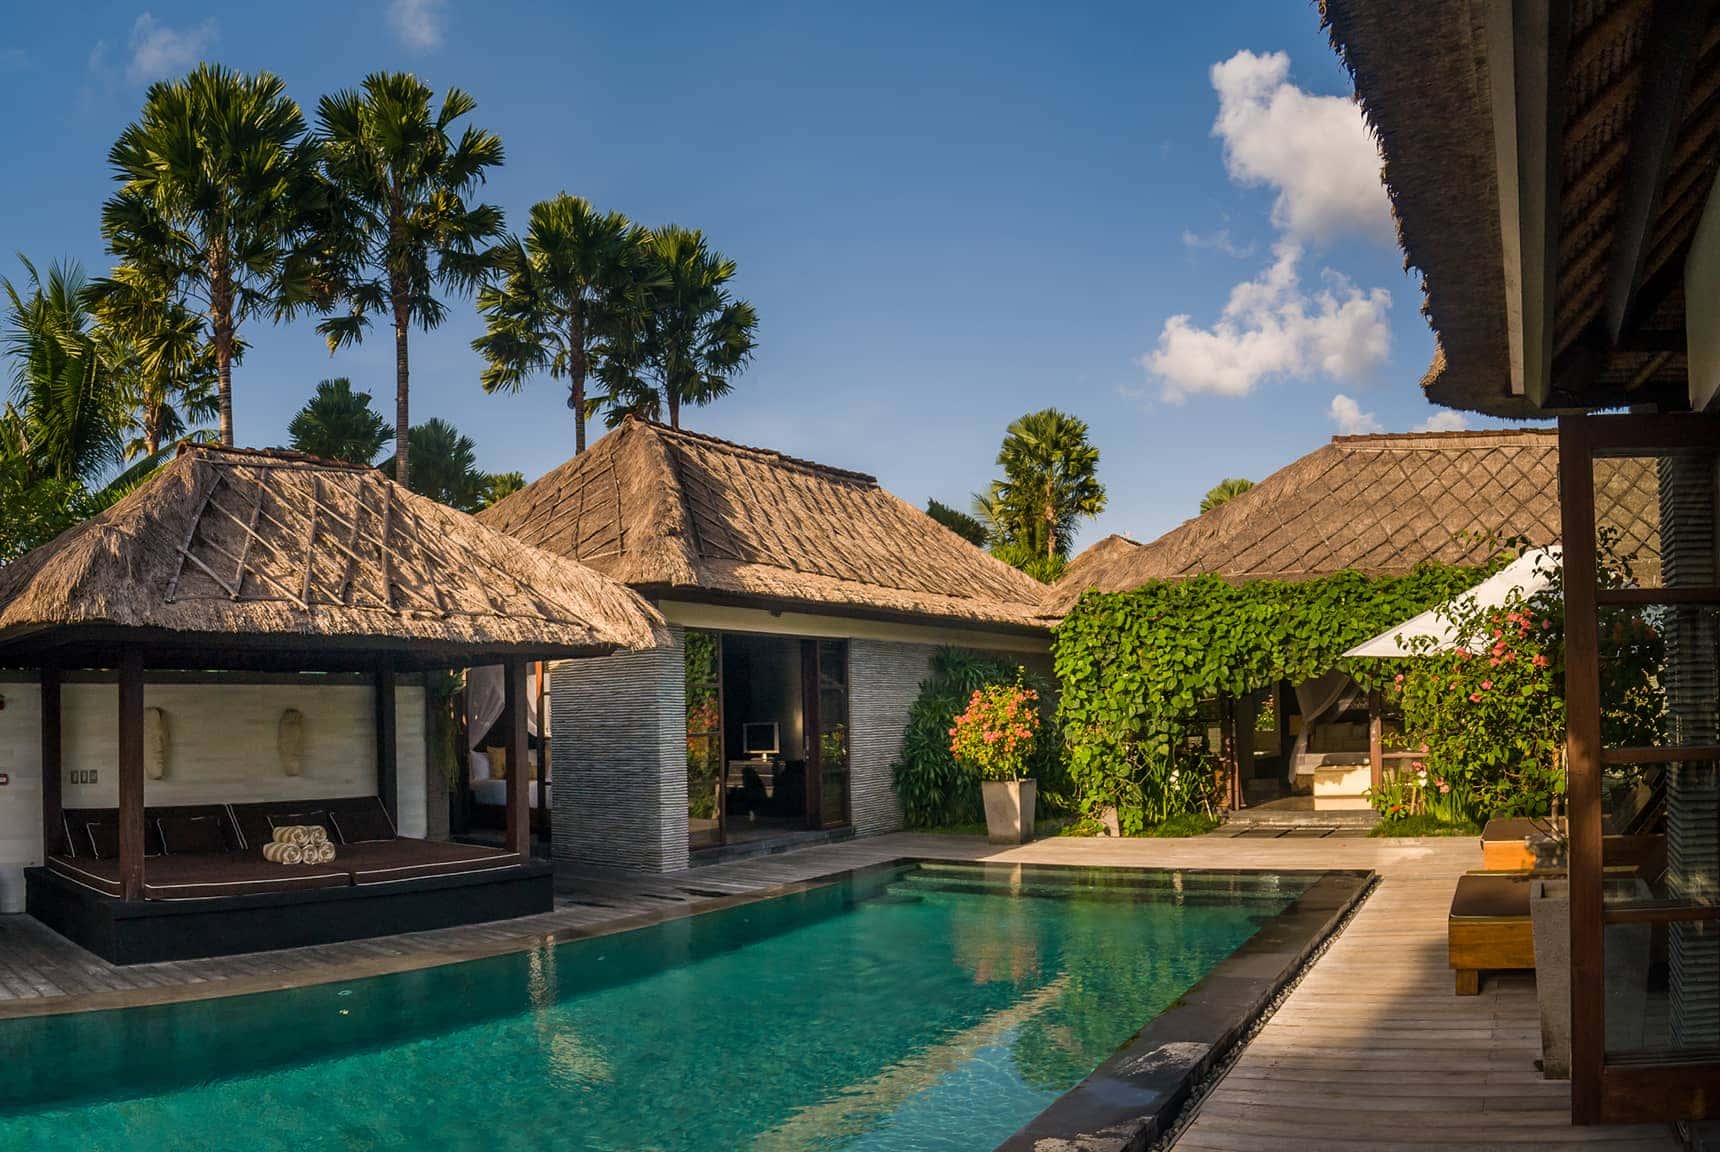 Villa Sentosa Seminyak - Seminyak, Bali Indonesia (Bali villa photography by master photographer Rick Carmichael of LuxViz)